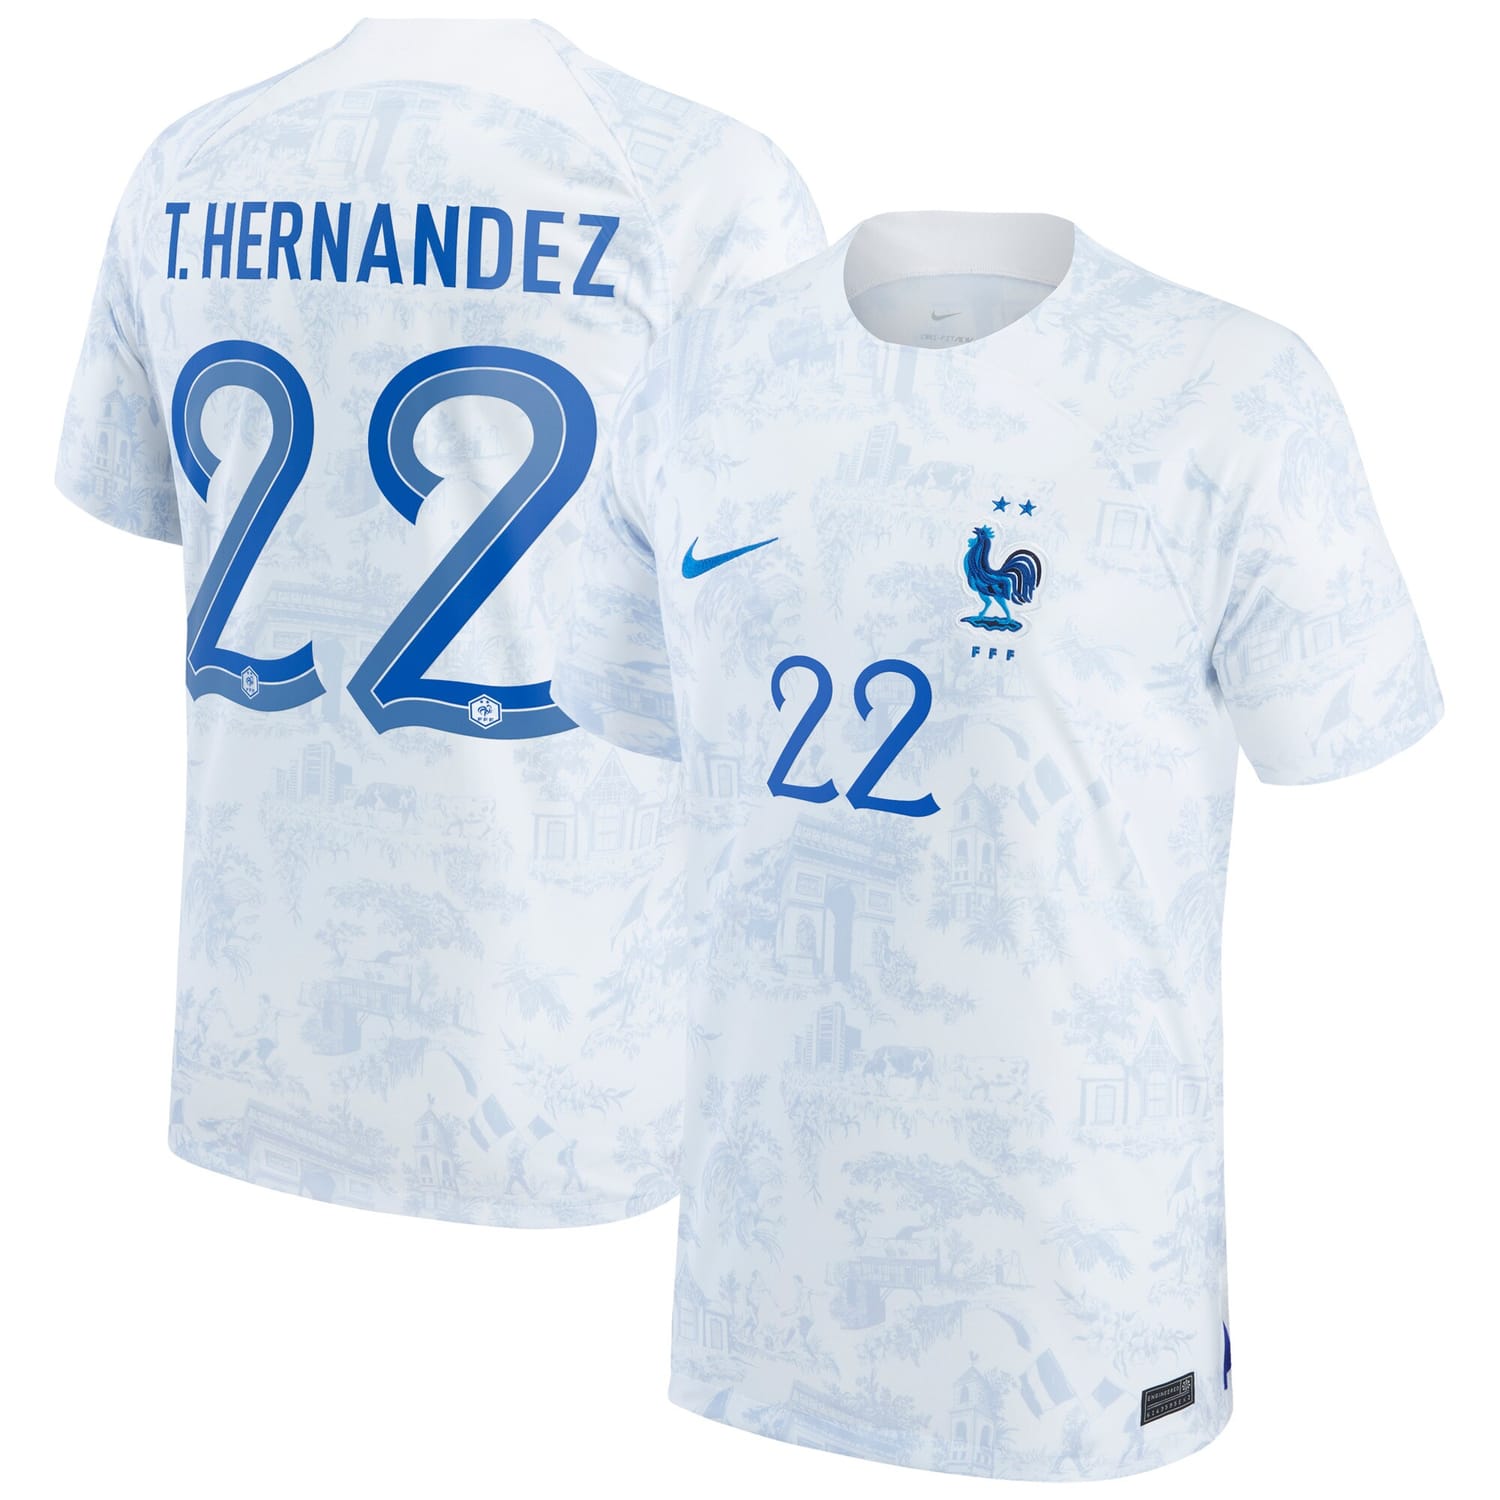 France National Team Away Jersey Shirt 2022 player Theo Hernandez printing for Men